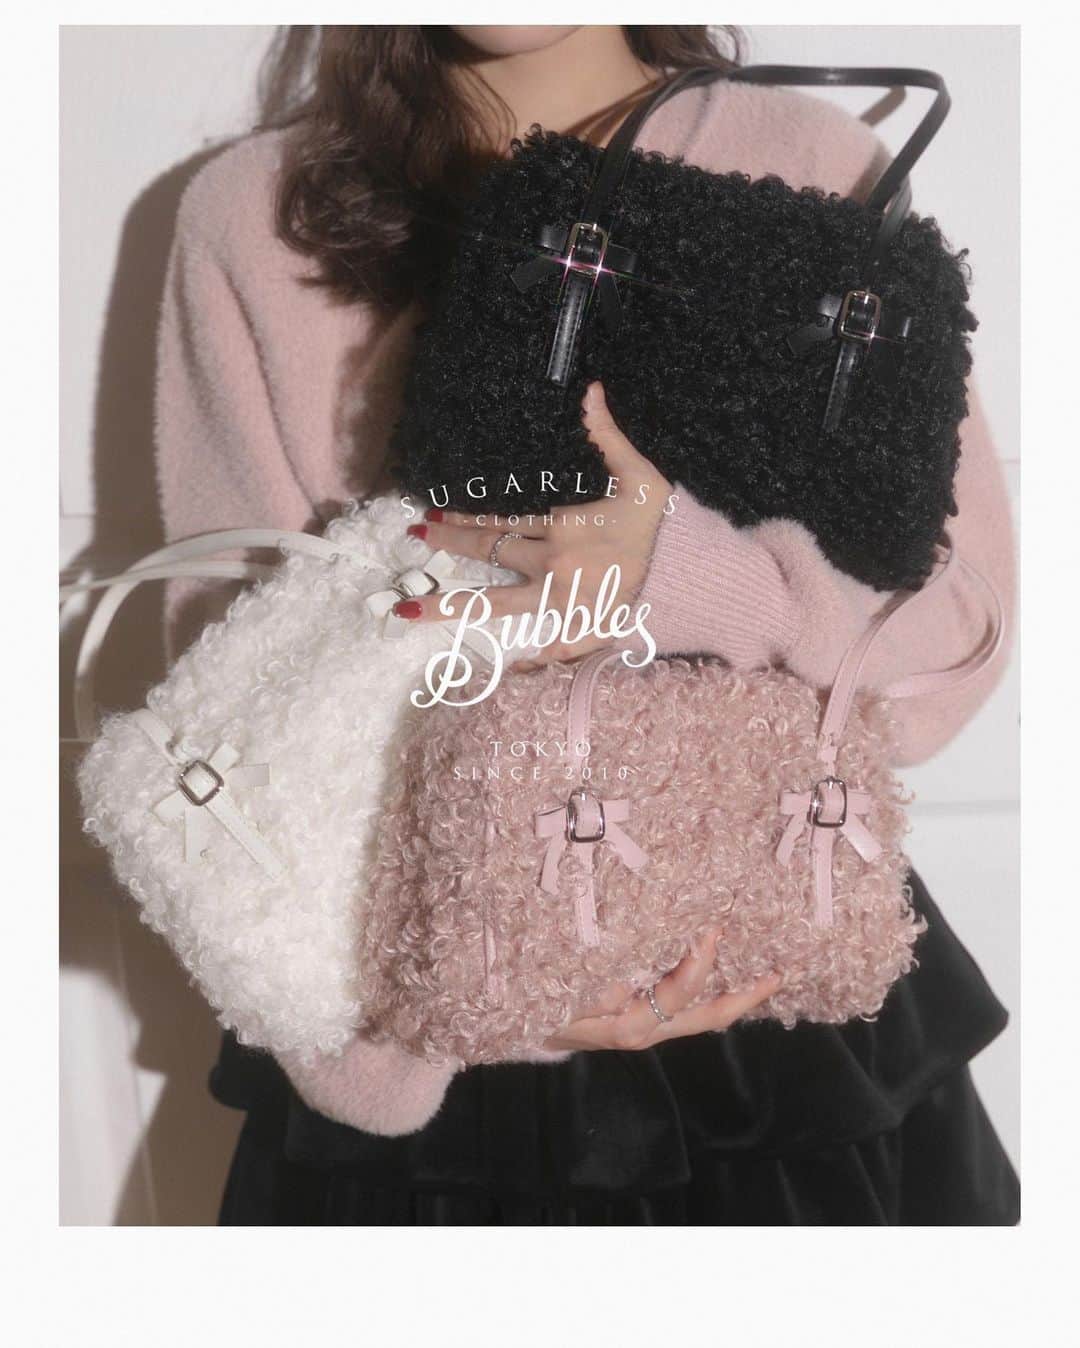 BUBBLESのインスタグラム：「ㅤㅤㅤㅤㅤㅤㅤㅤㅤㅤㅤㅤㅤ ㅤㅤㅤㅤㅤㅤㅤㅤㅤㅤㅤㅤㅤ BUBBLES New Collection Winter / December,2023  ☑︎ poodle fur bag ¥7,900+tax color :  ivory / black / pink https://www.sparklingmall.jp/c/sparklingmall_all/BS71371 ㅤㅤㅤㅤㅤㅤㅤㅤㅤㅤㅤ _____________________________________________  #bubbles #bubblestokyo  #bubbles_shibuya #bubbles_shinjuku #bubblessawthecity #bubbles #new #clothing #fashion #style #styleinspo #girly #classicalgirly #brushgirly #harajuku #shibuya #newarrival #october #aw #December #winter #holiday #2023_BUBBLES #December2023_BUBBLES」